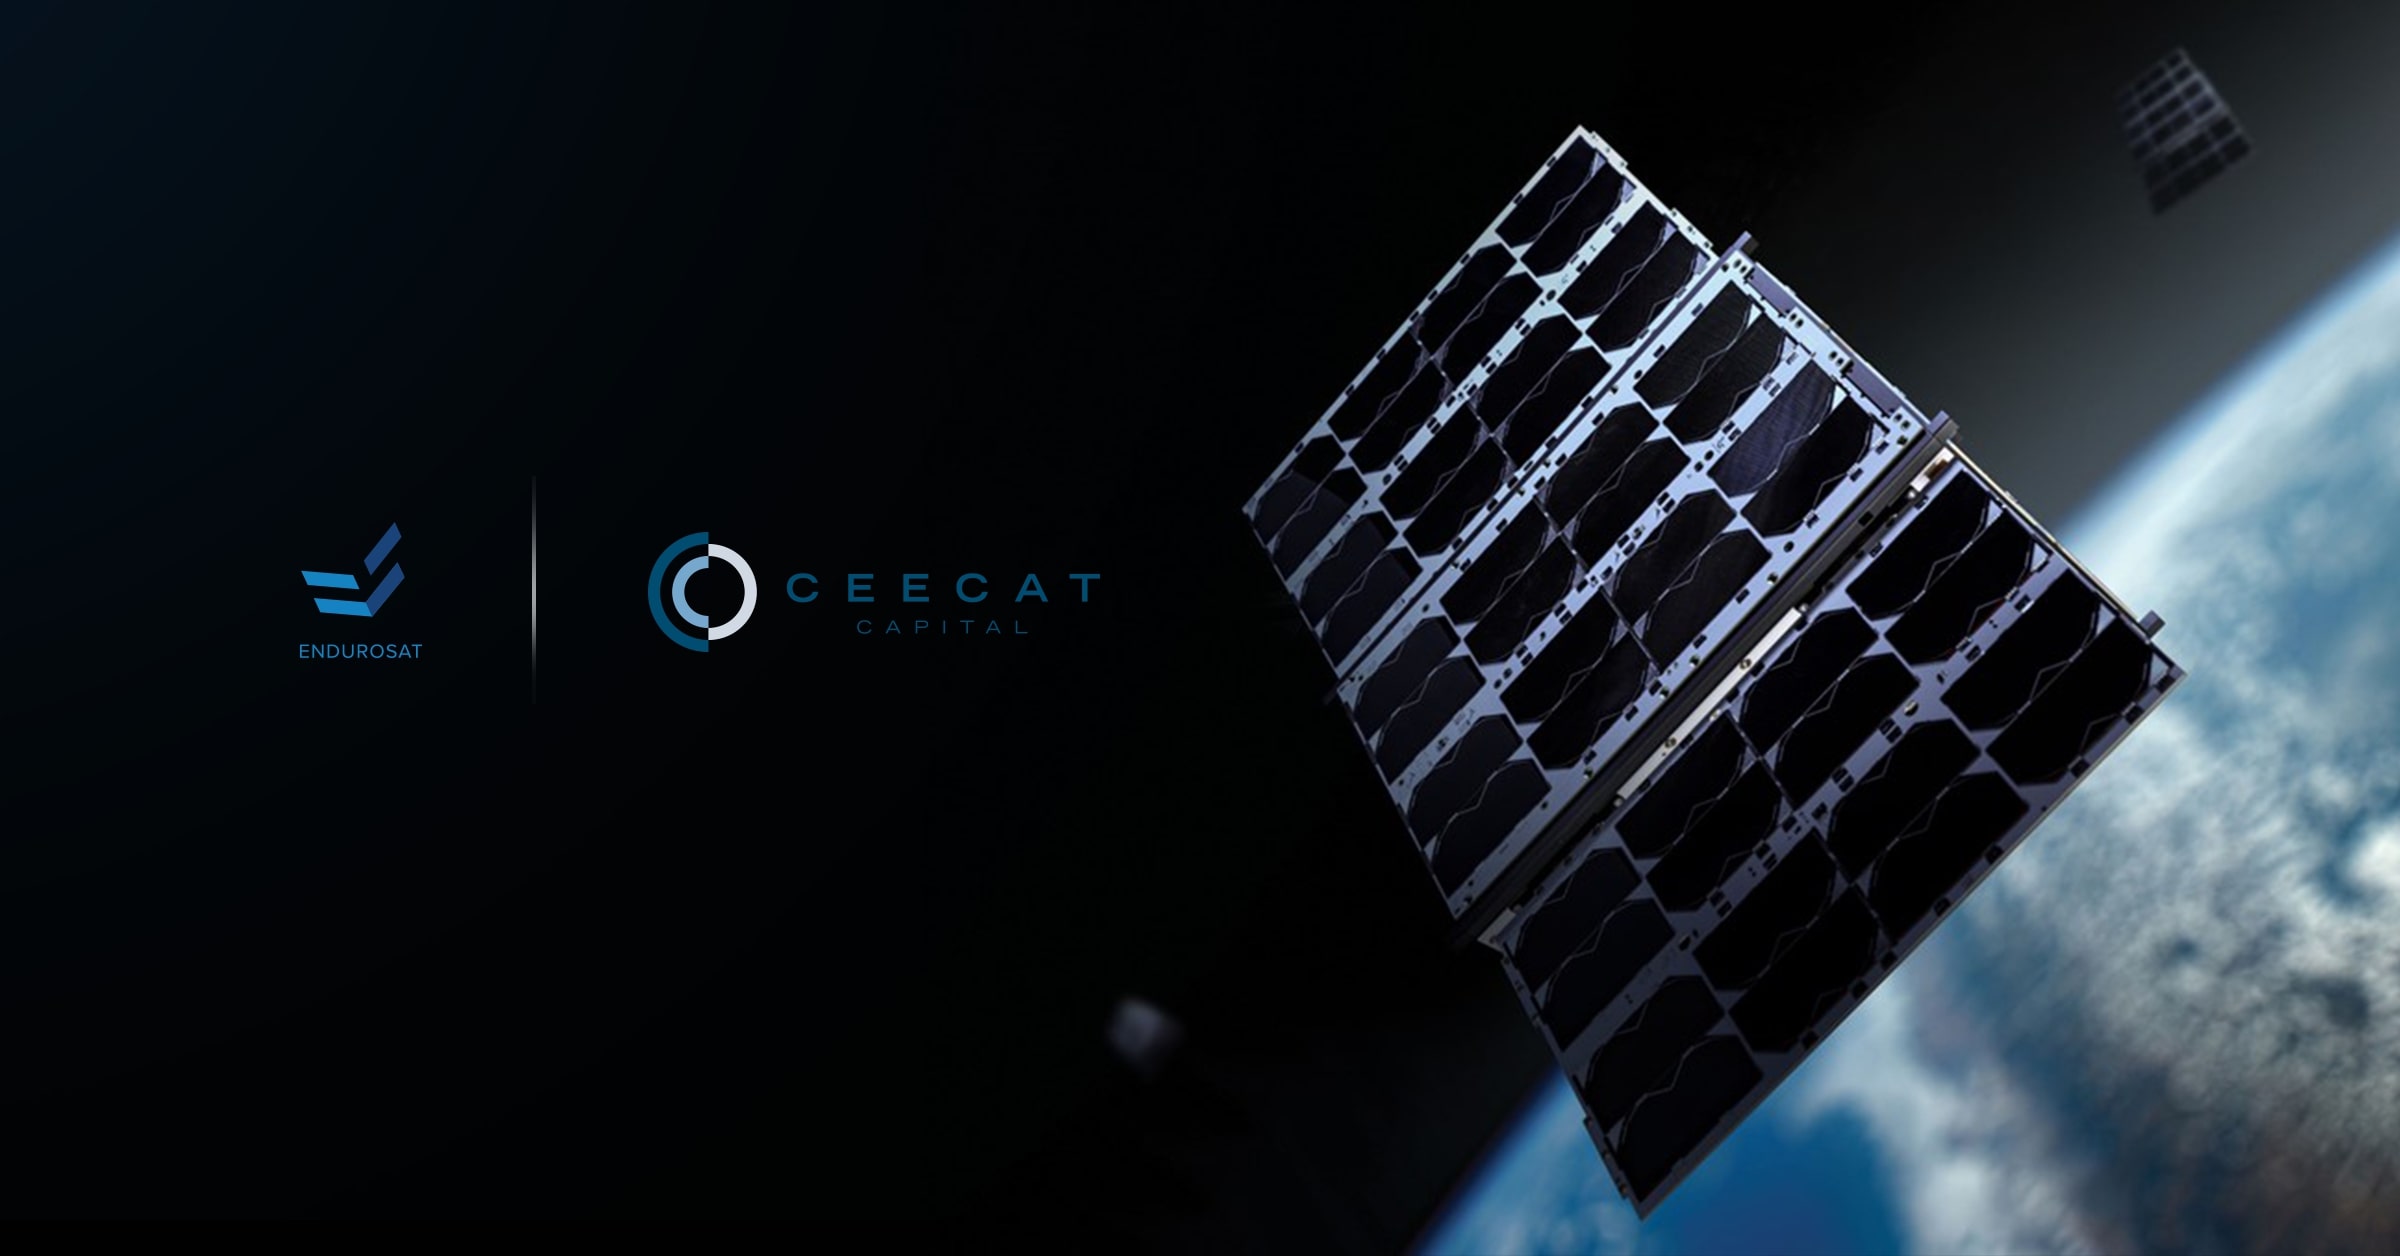 EnduroSat-raises-10m-USD-Series-A-led-by-CEECAT-Capital